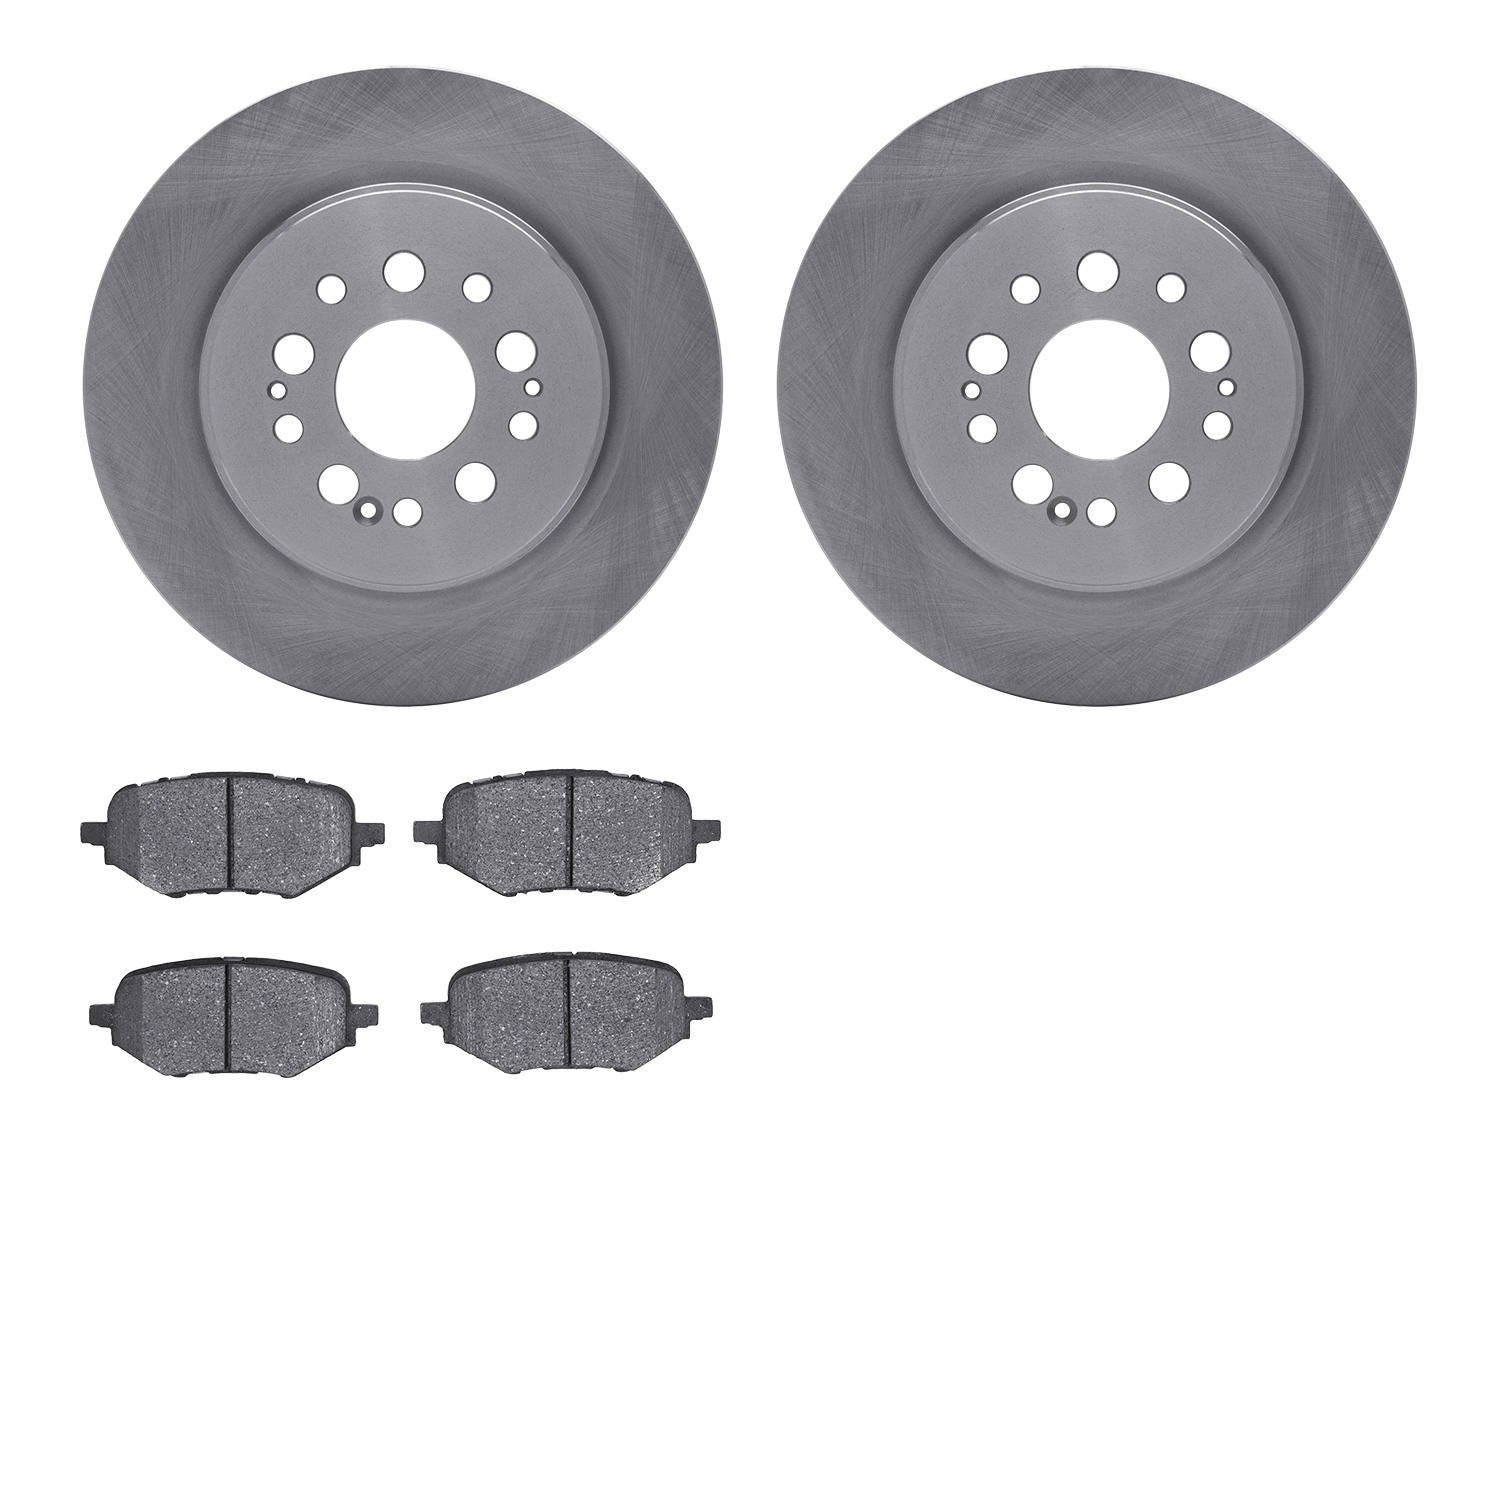 6302-59116 Brake Rotors with 3000-Series Ceramic Brake Pads Kit, Fits Select Acura/Honda, Position: Rear